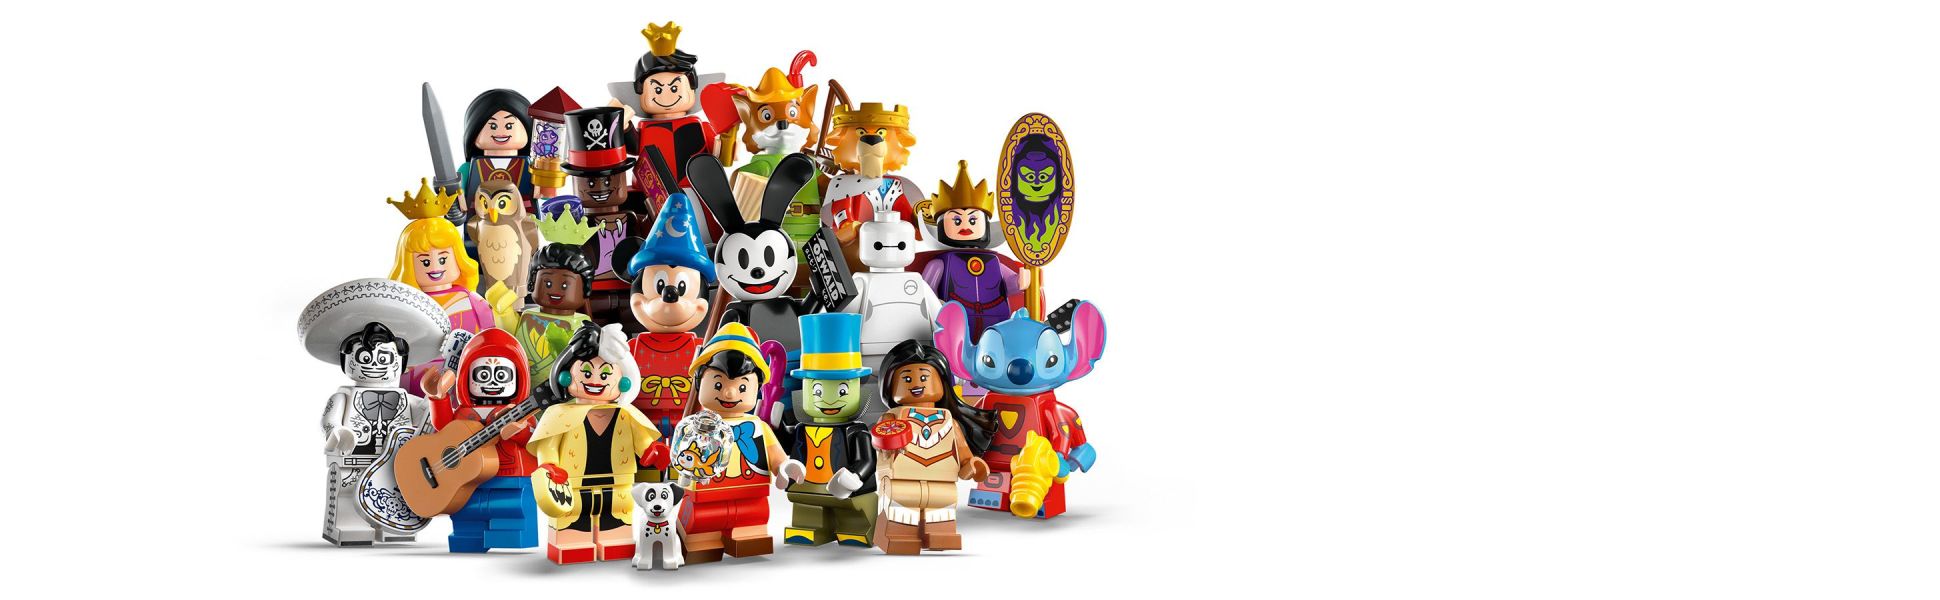 LEGO Minifigures 71038 Disney 100th Anniversary Series X2 New/Sealed  Display boxes of 36 Minifigures - MinifigureMaddness